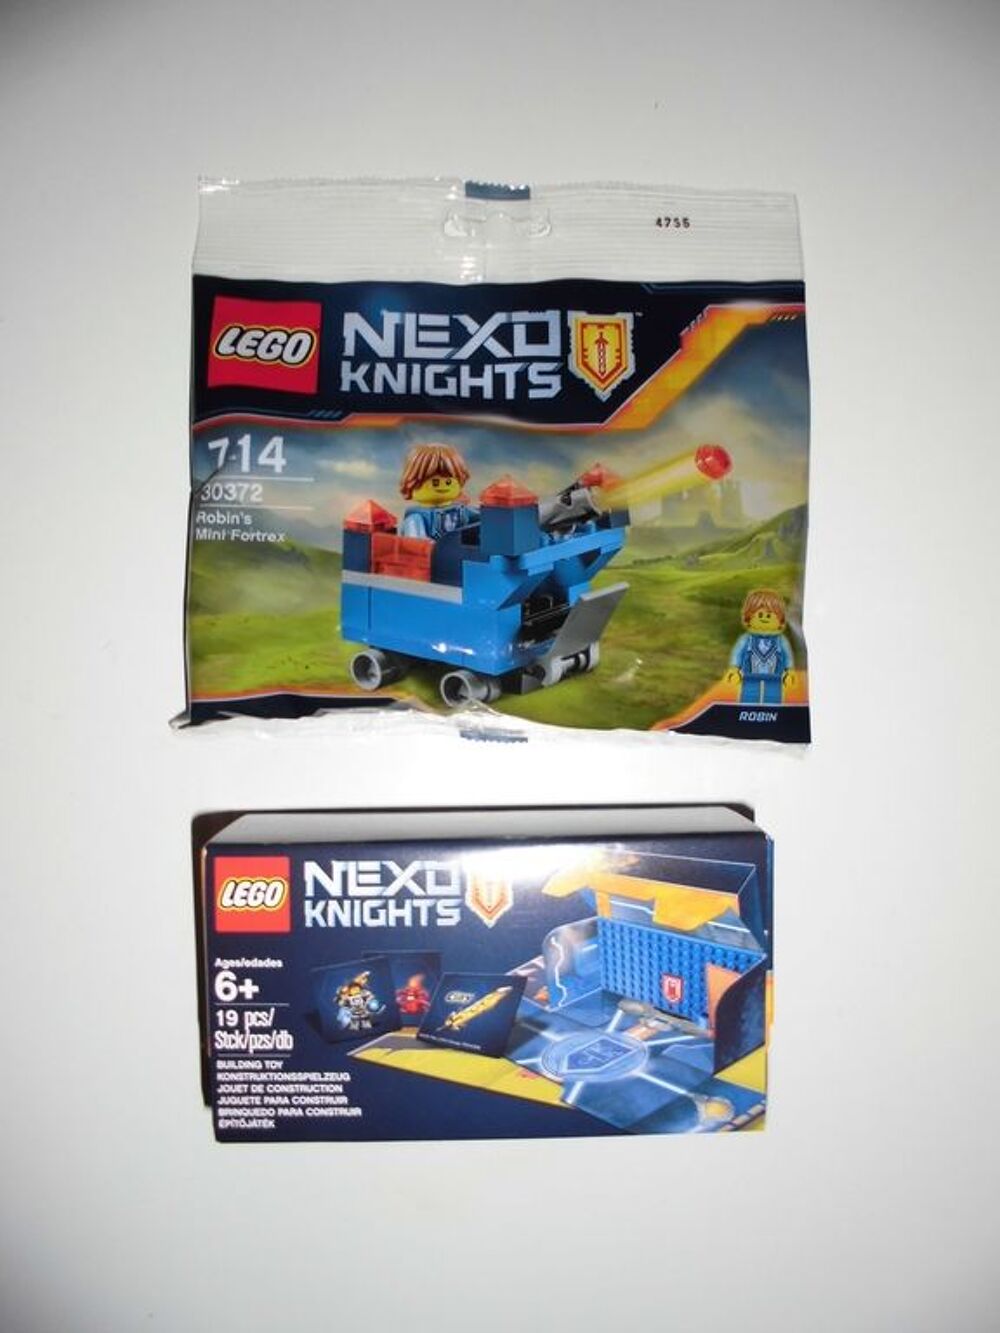 Lego 30372 nexo knigths Robin's fortrex + battle station 500 